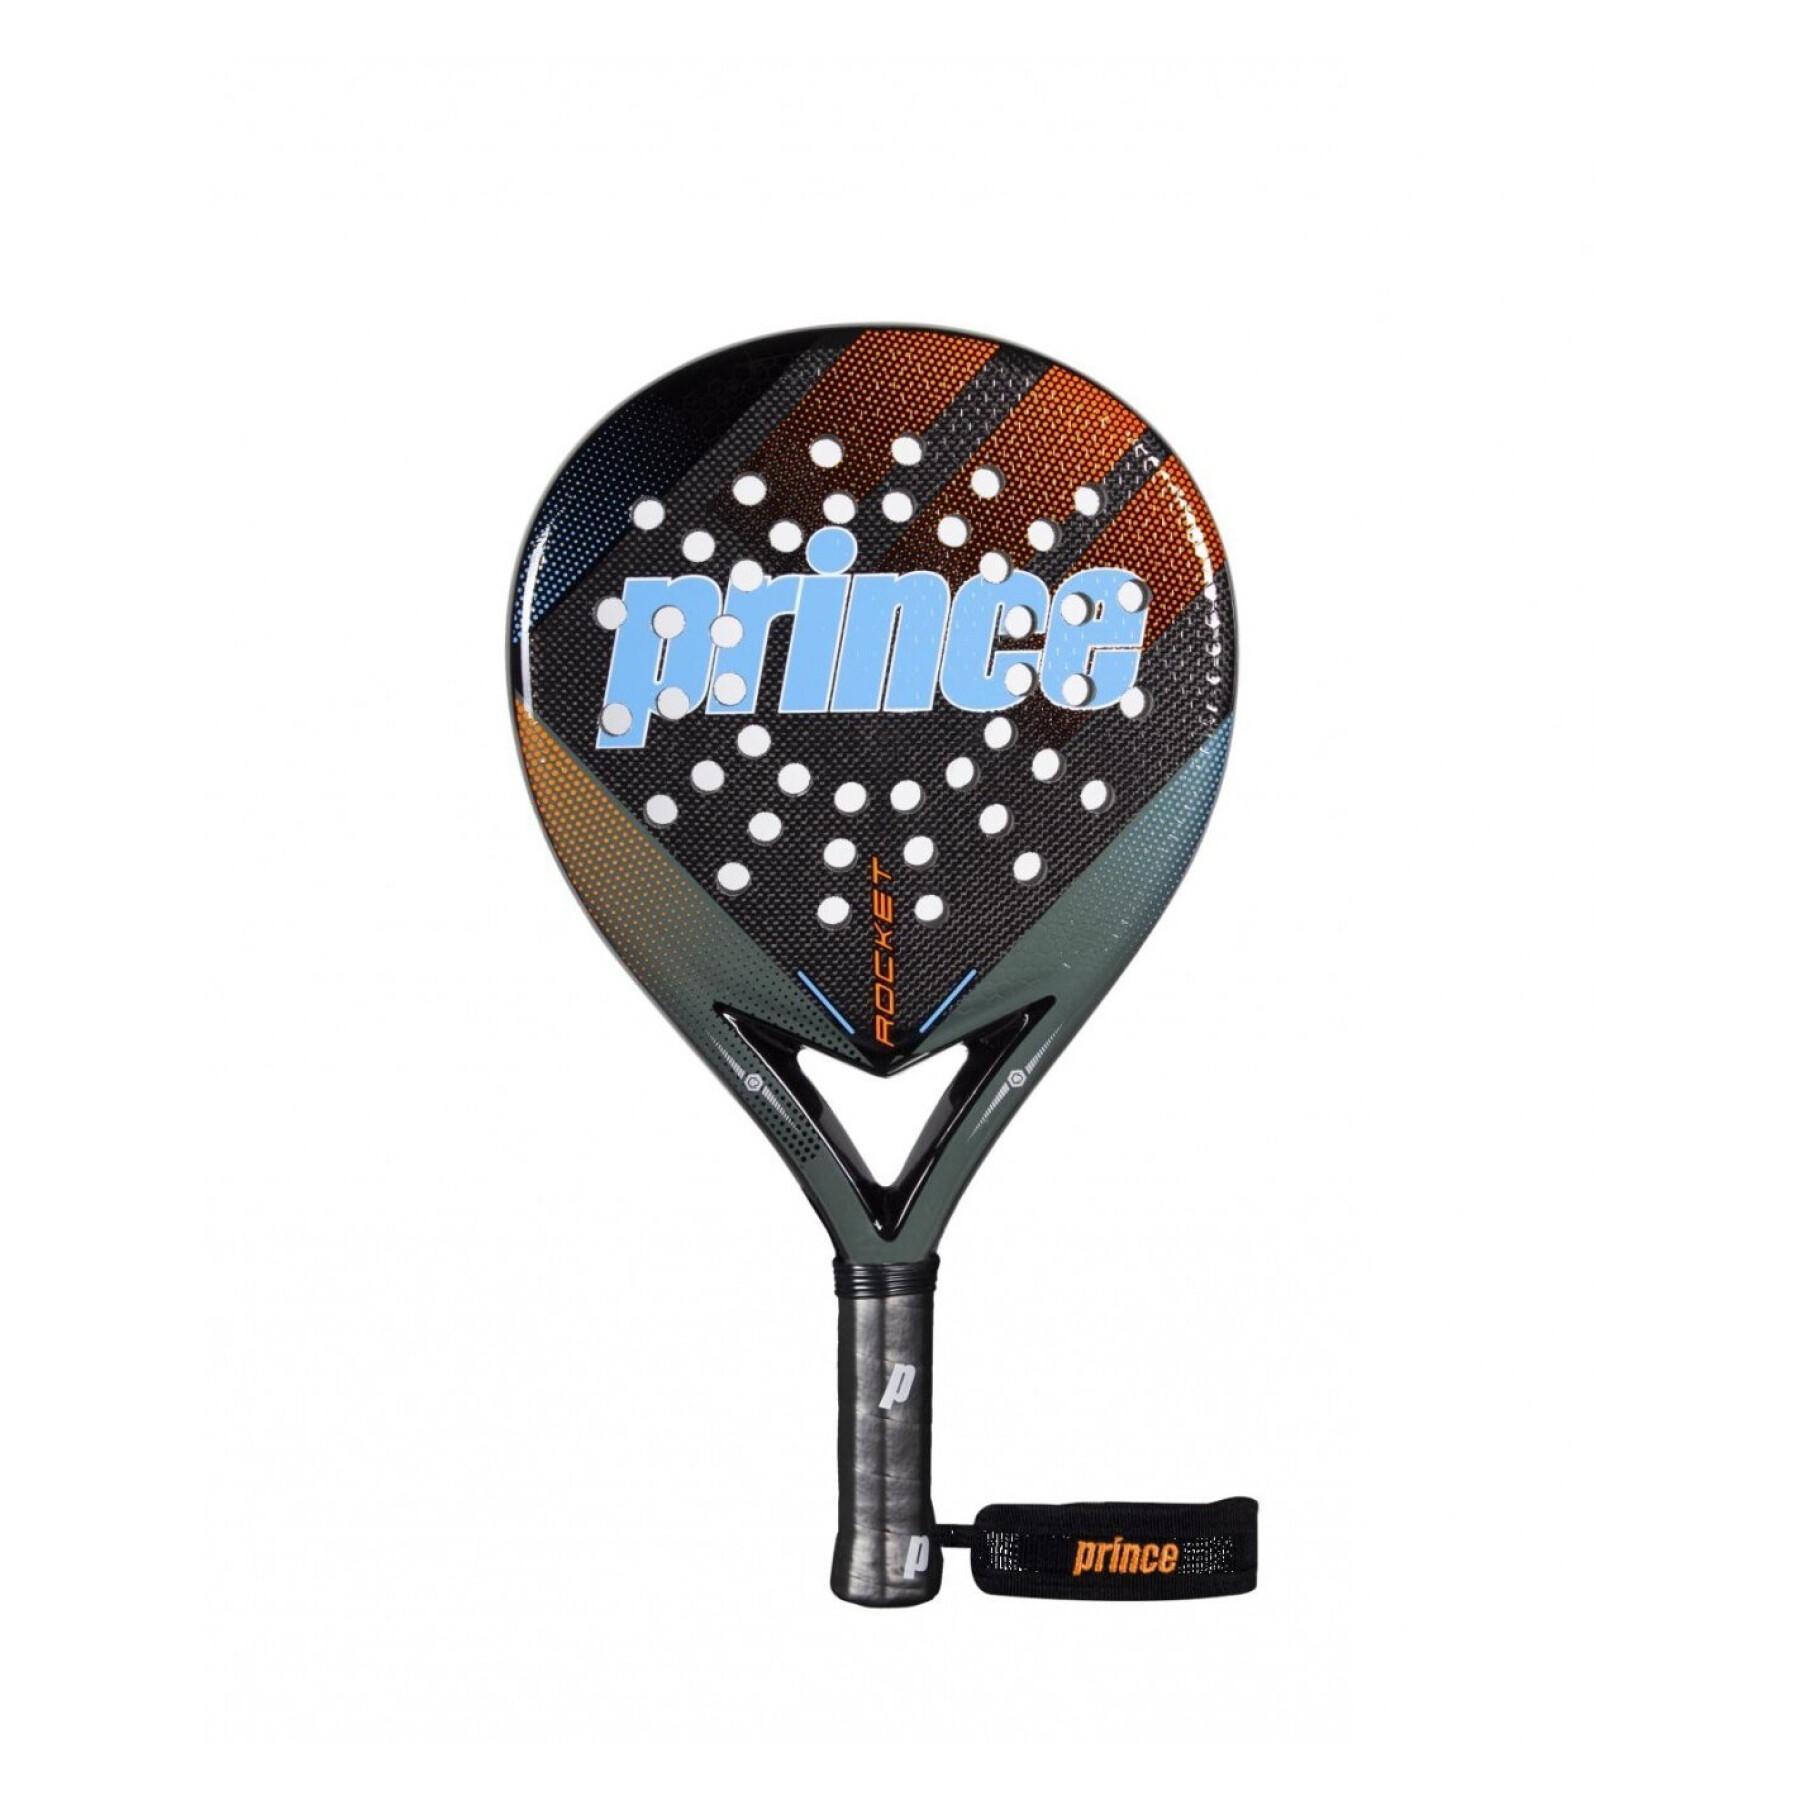 Racket from padel Prince Rocket